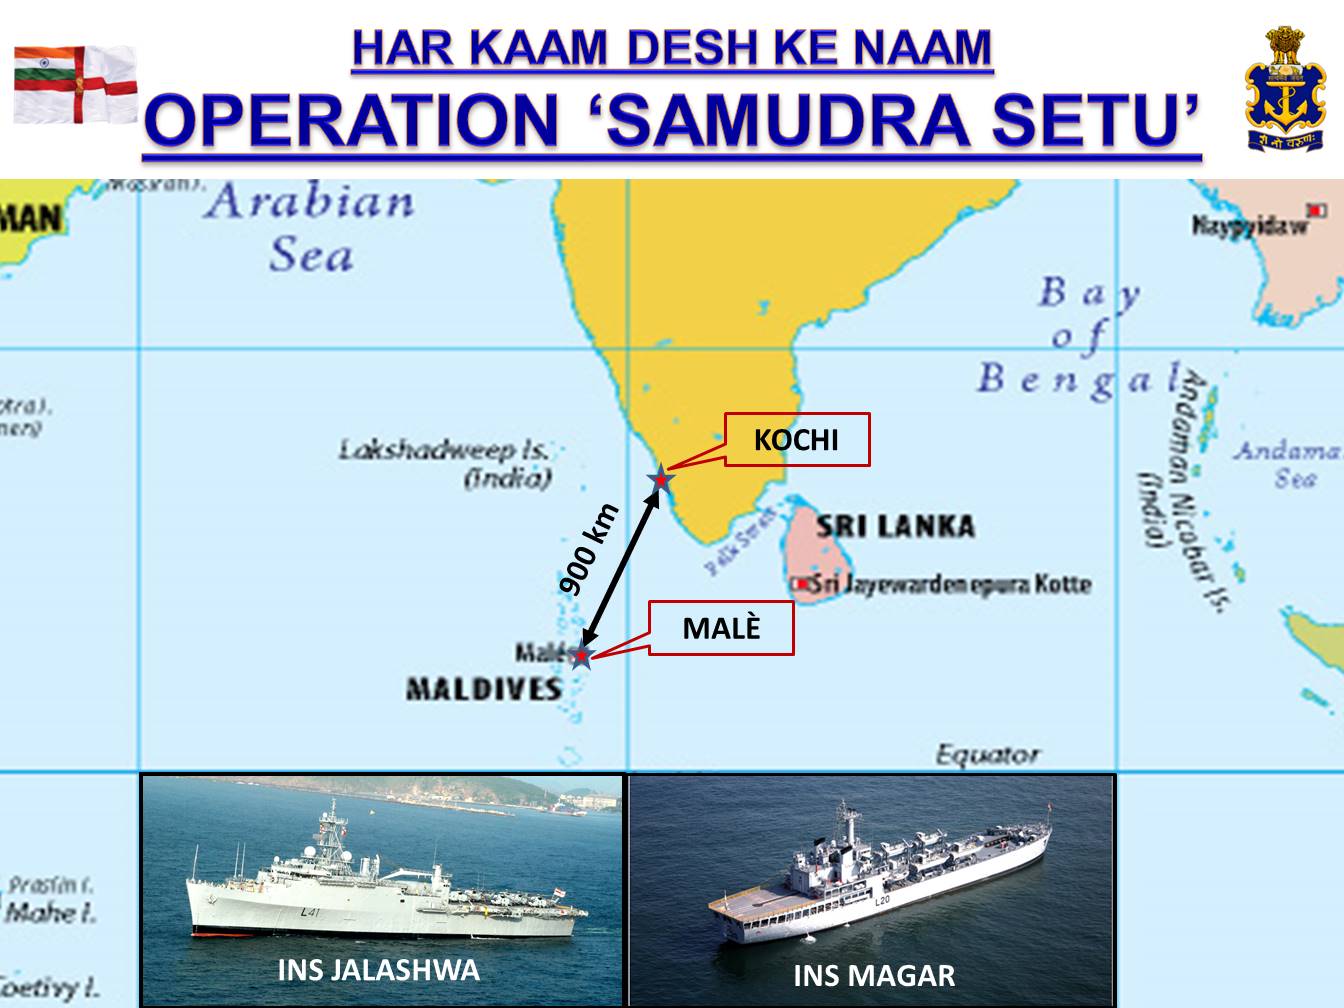 Indian Navy launches Operation “Samudra Setu”